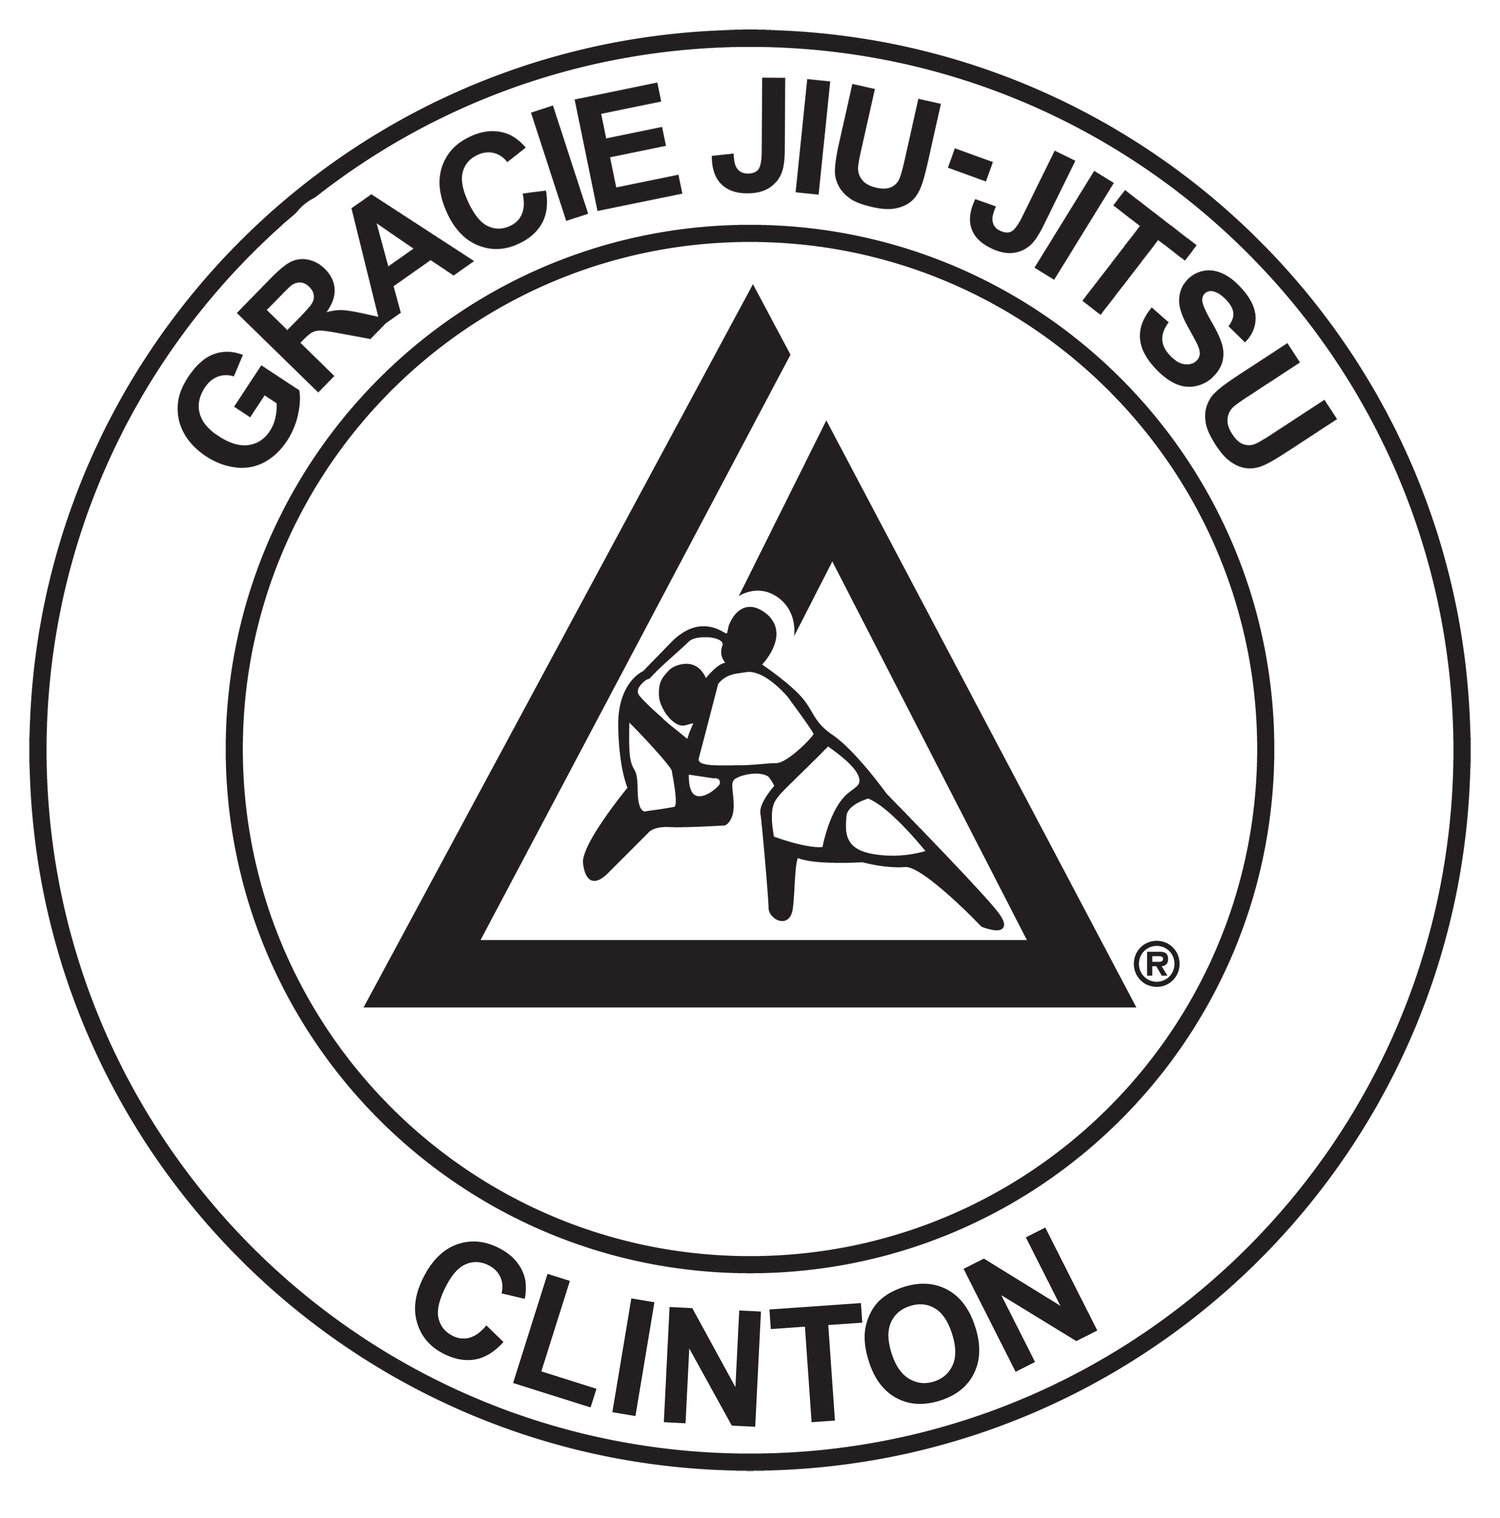 Gracie Jiu Jitsu Clinton